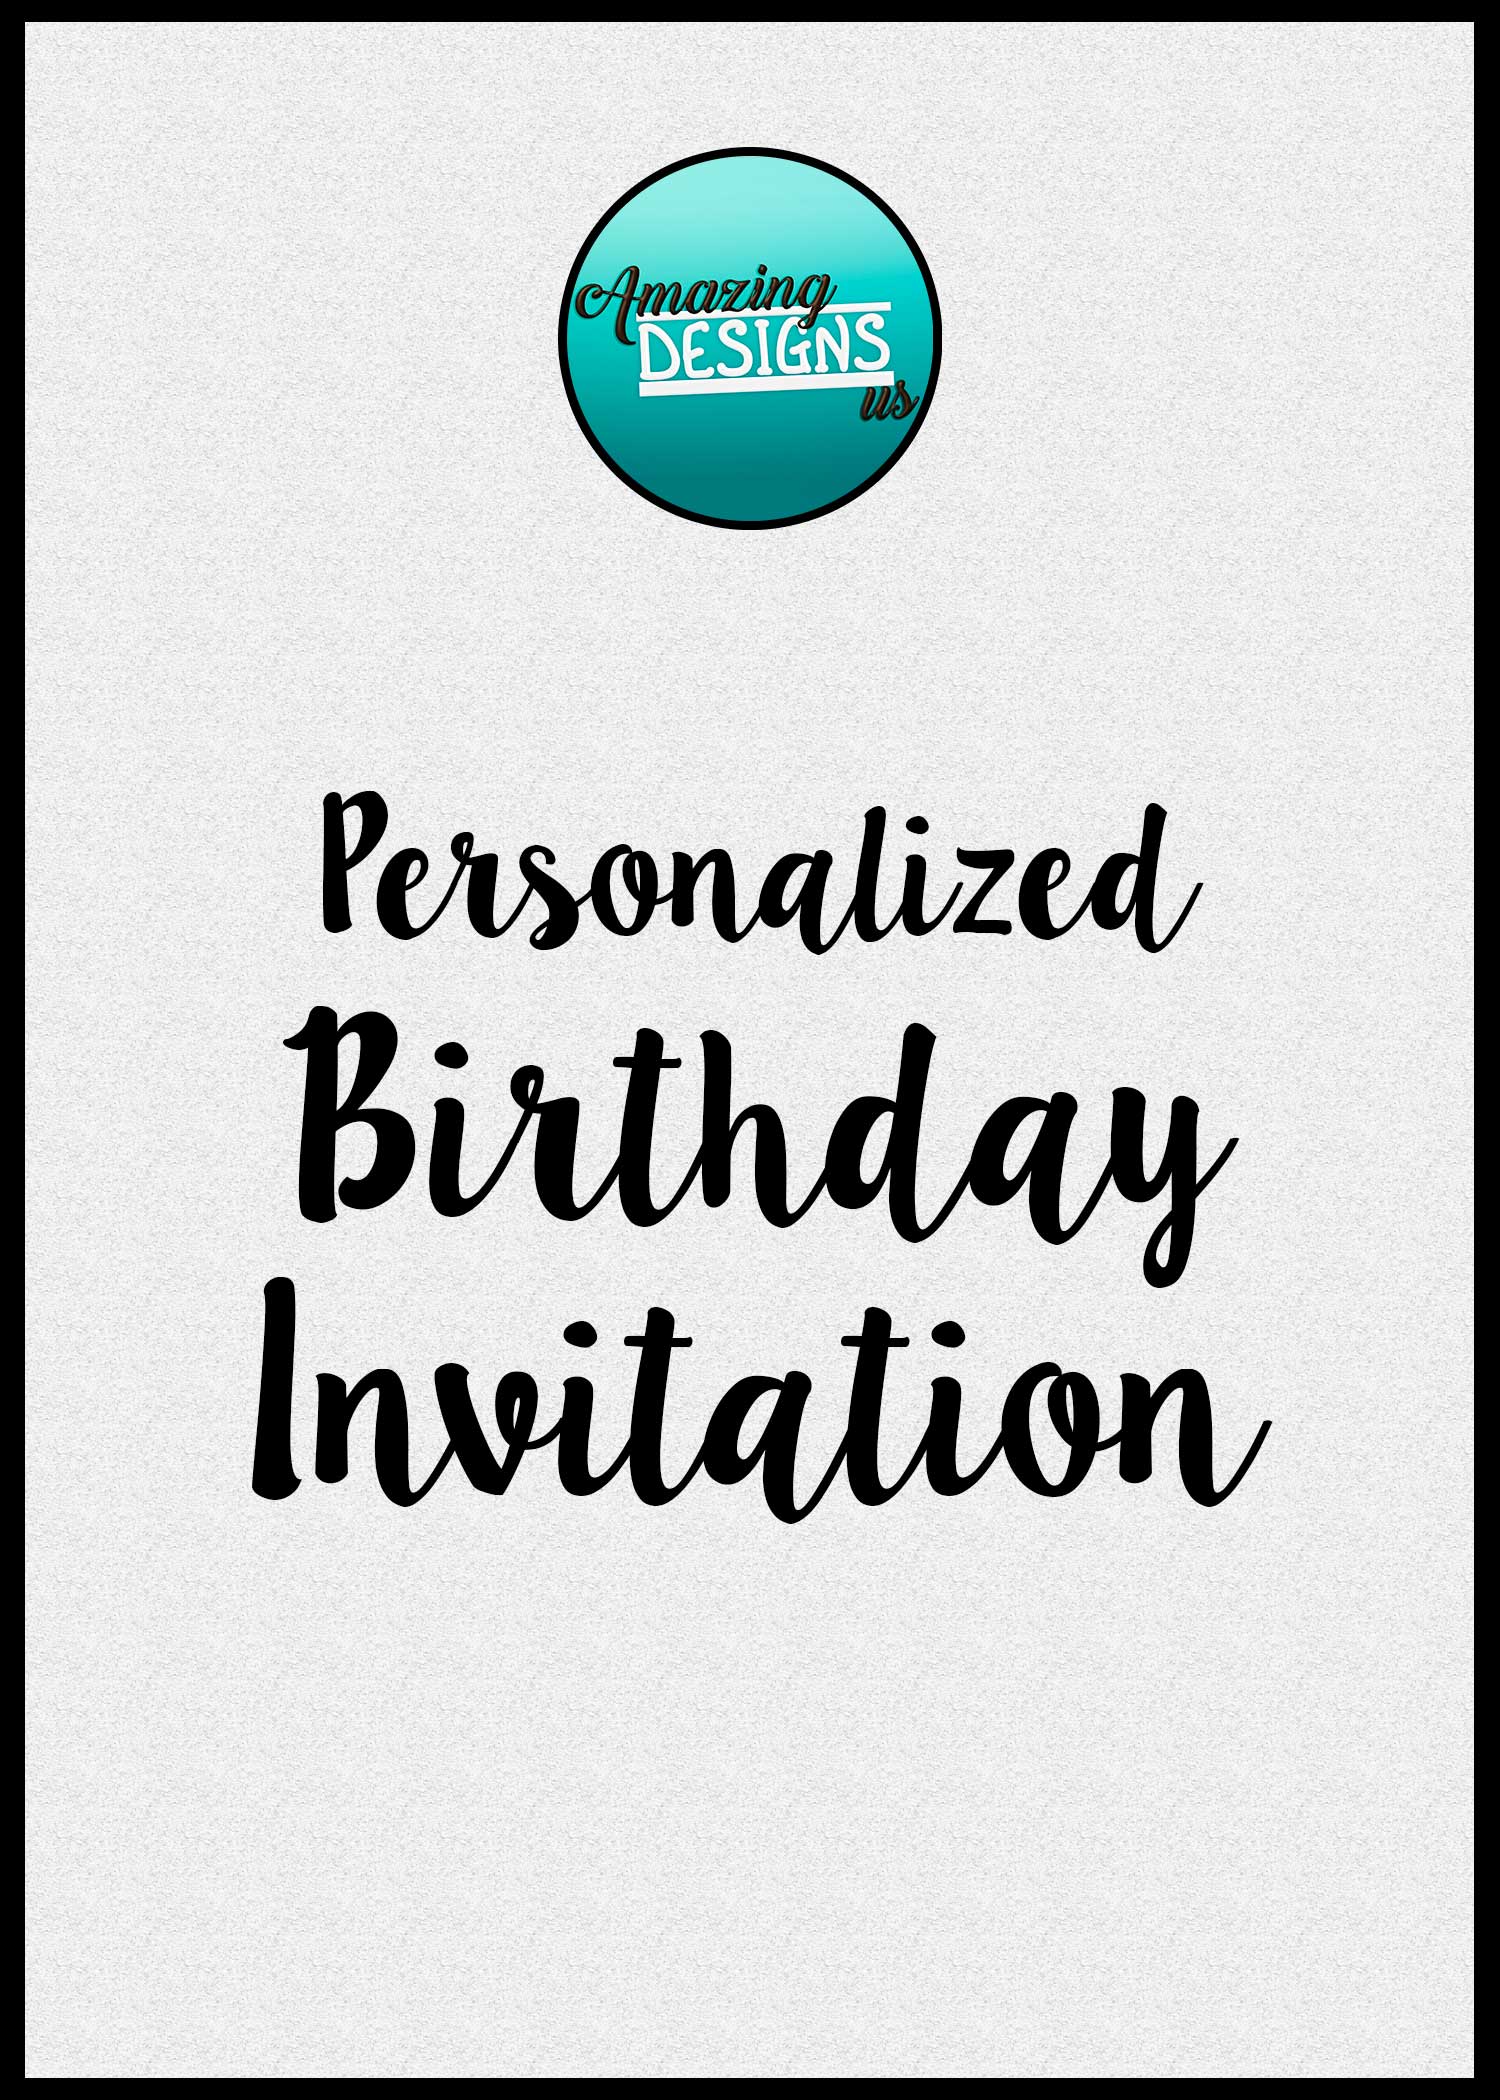 Personalized Birthday Invitation Amazing Designs US